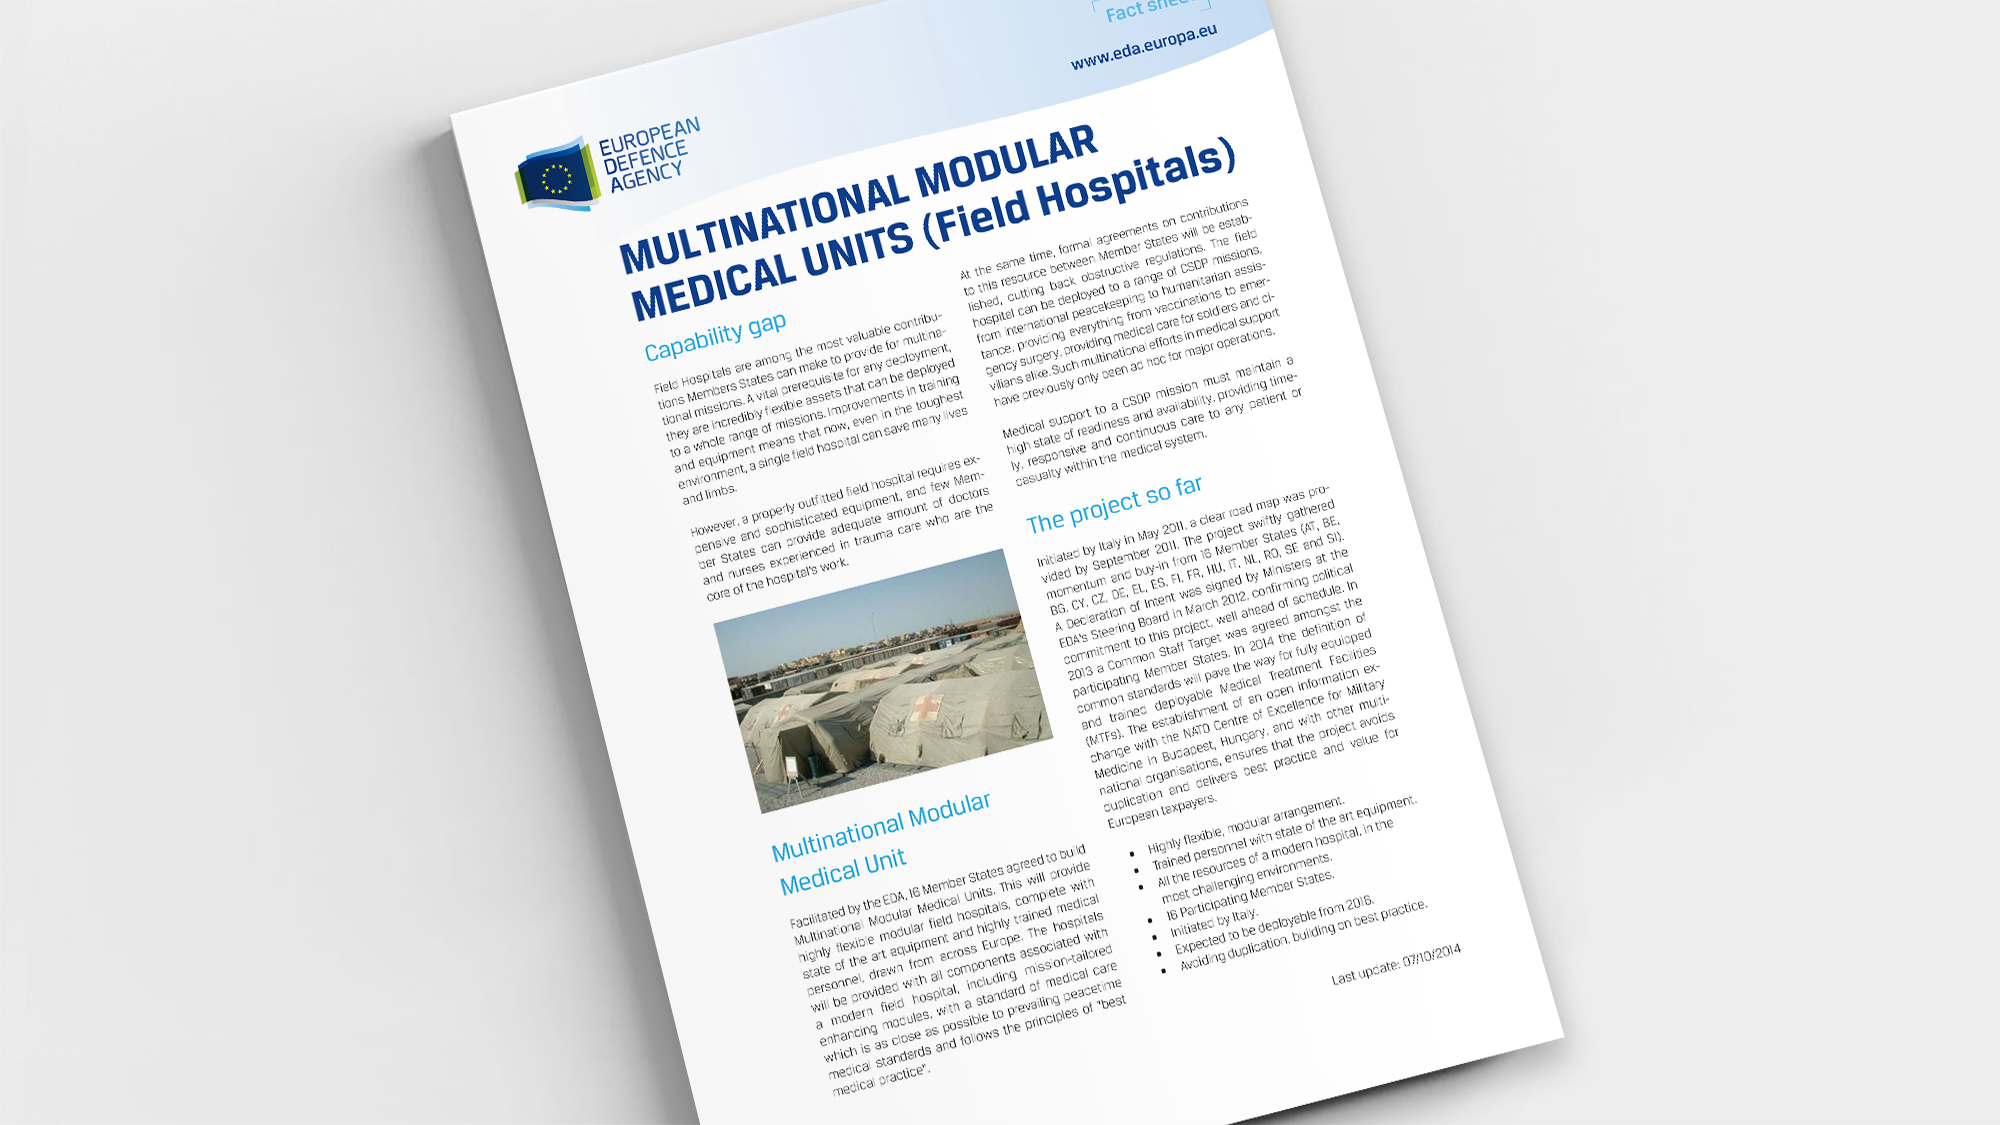 Factsheet Field Hospitals (Multinational Modular Medical Unit)